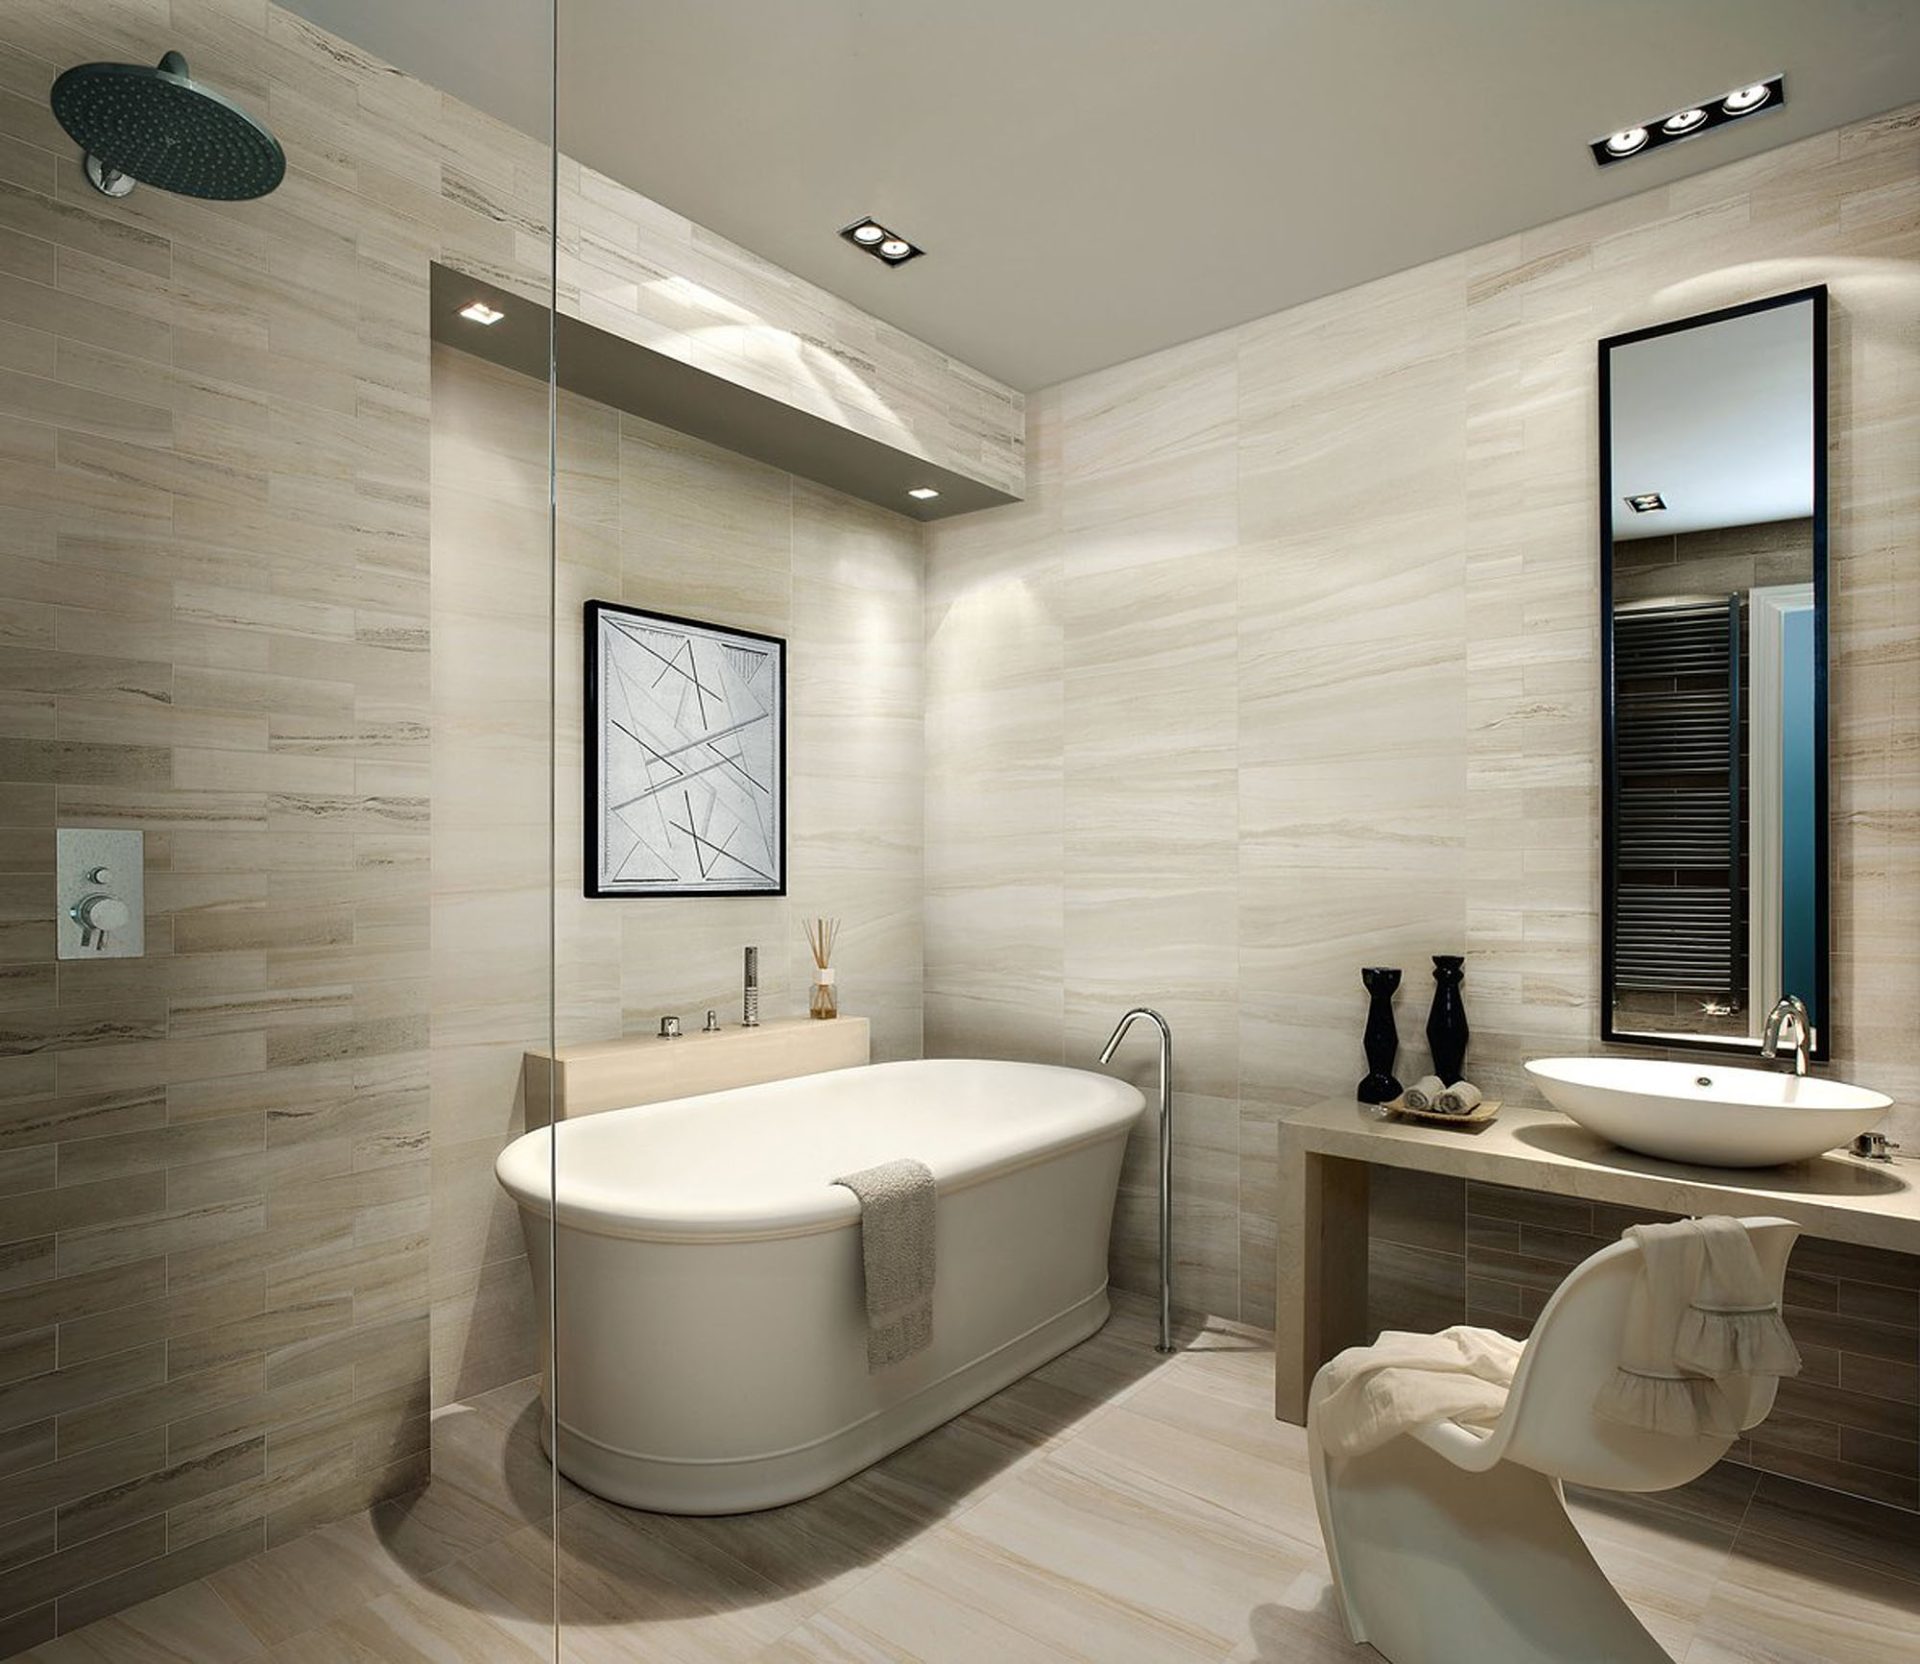 Flow Ivory porcelain tiles featured in modern bathroom